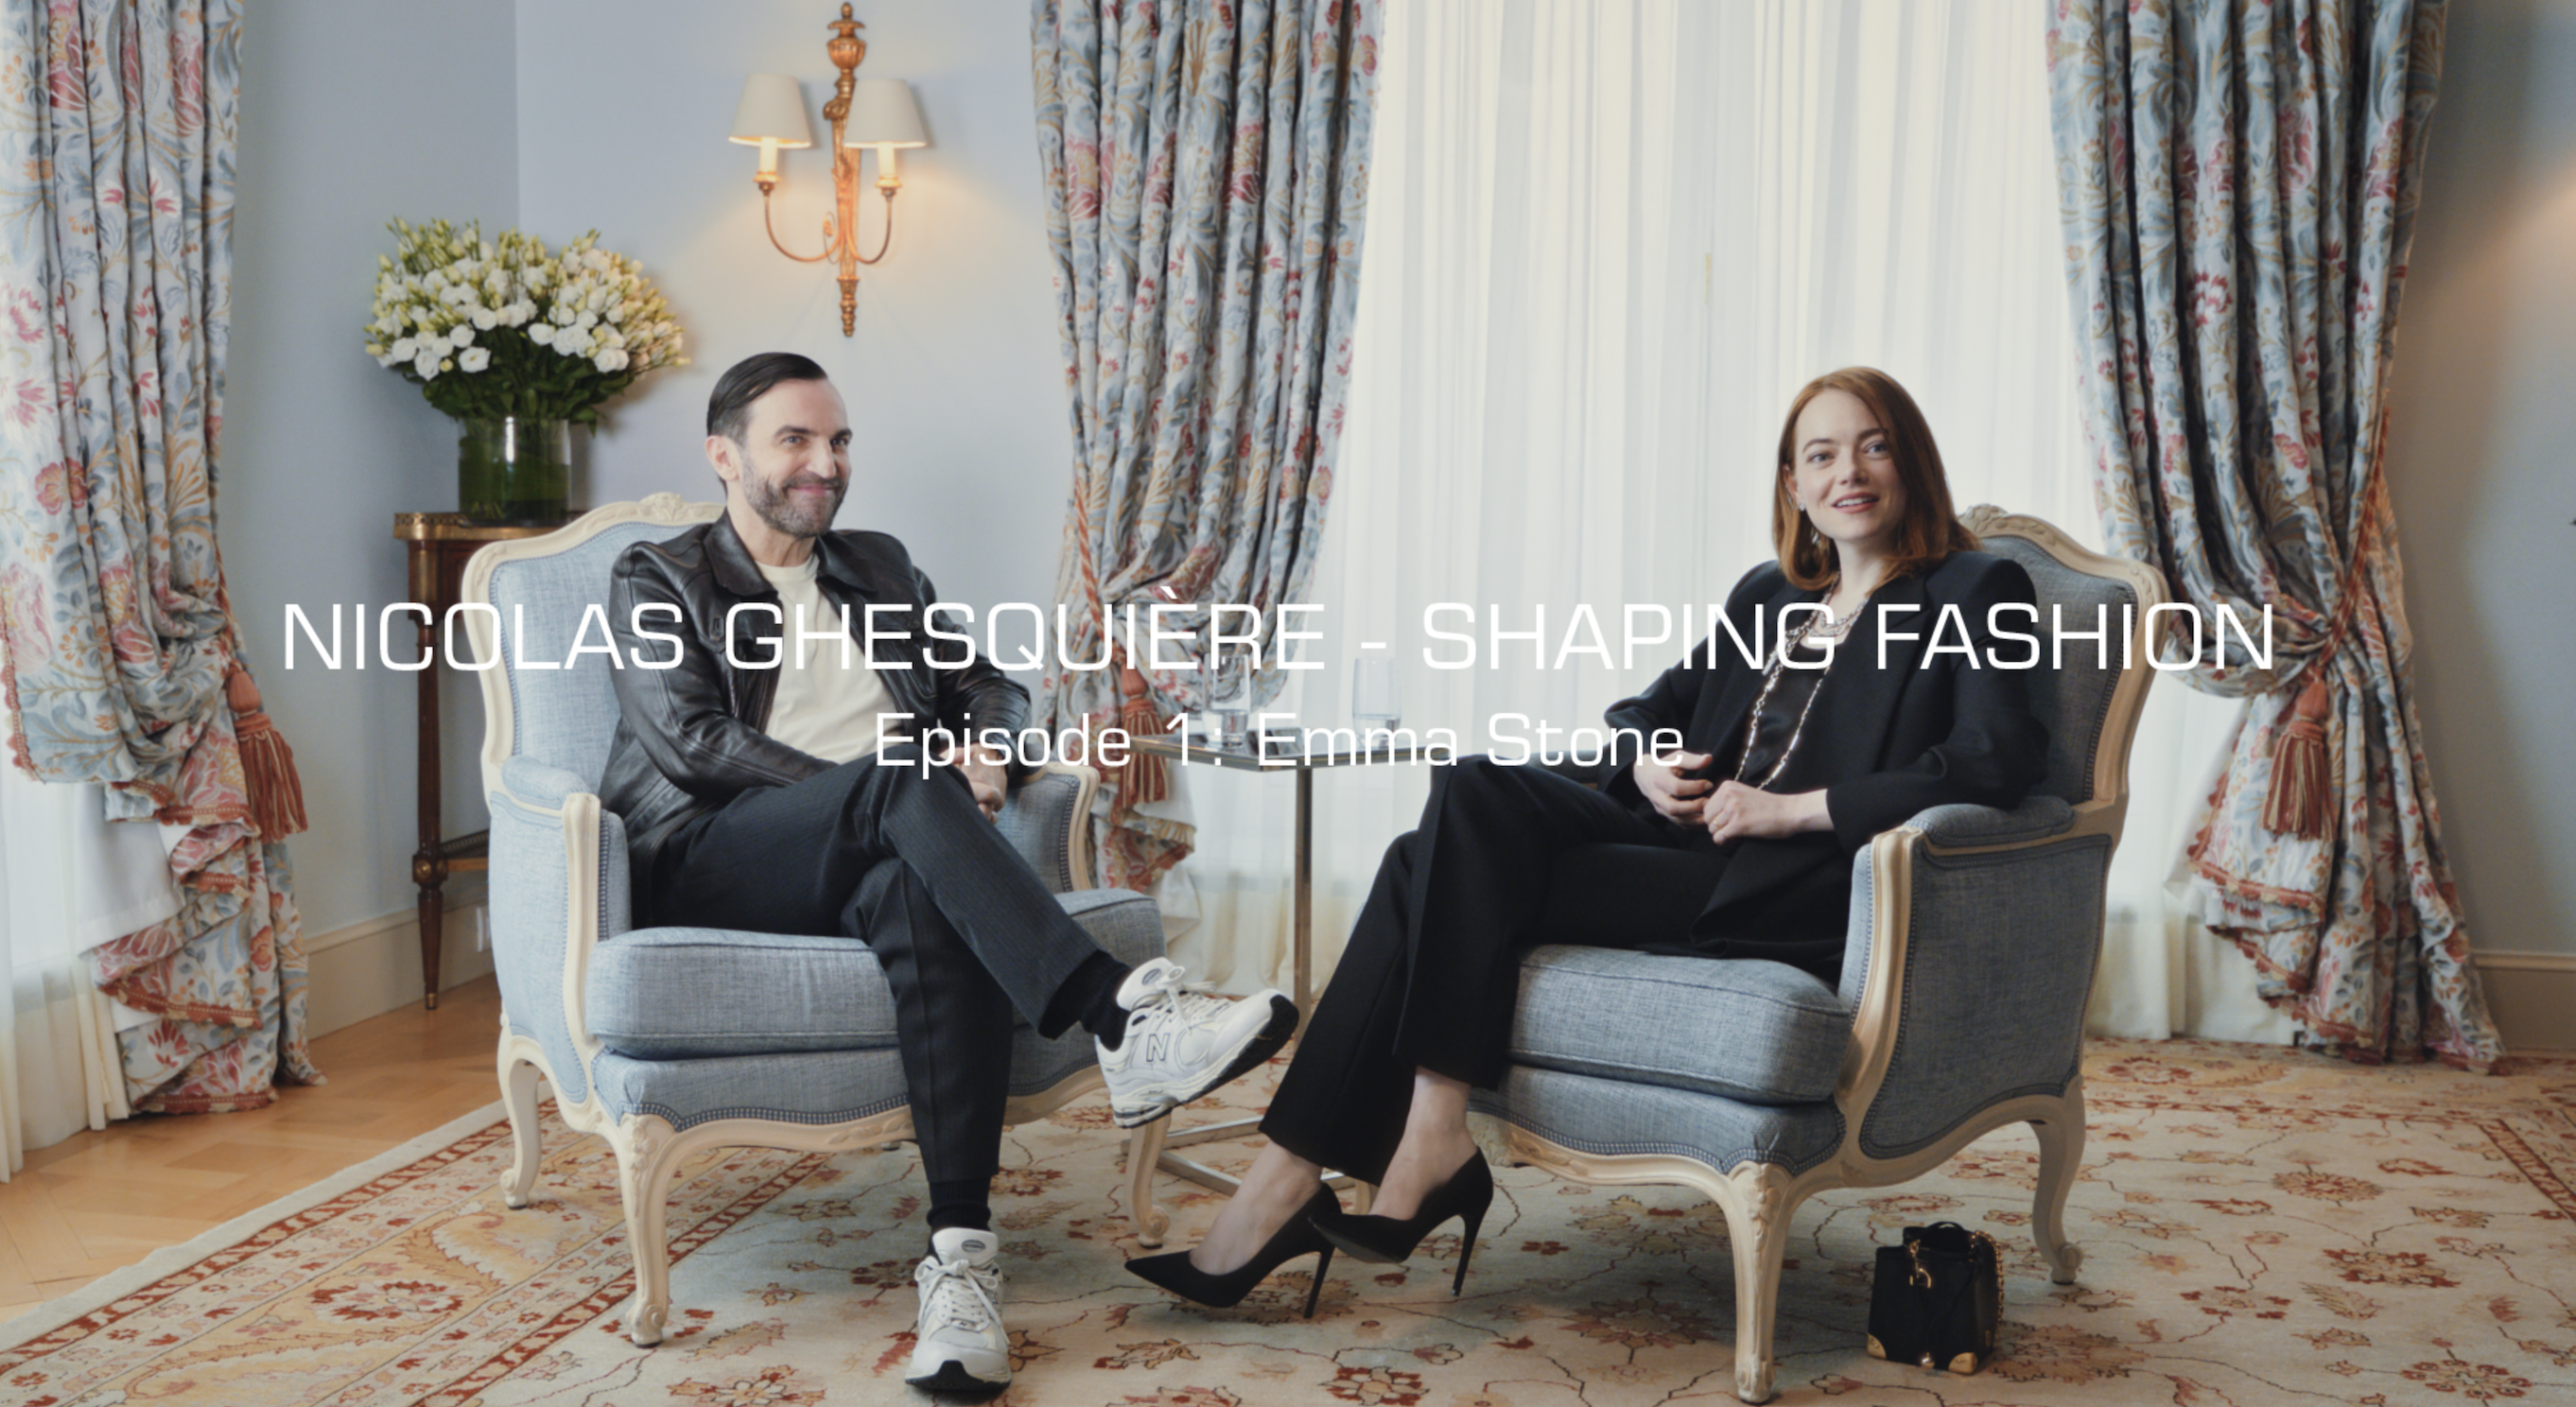 Louis Vuitton presenta la serie exclusiva en YouTube "Nicolas Ghesquière: shaping fashion"